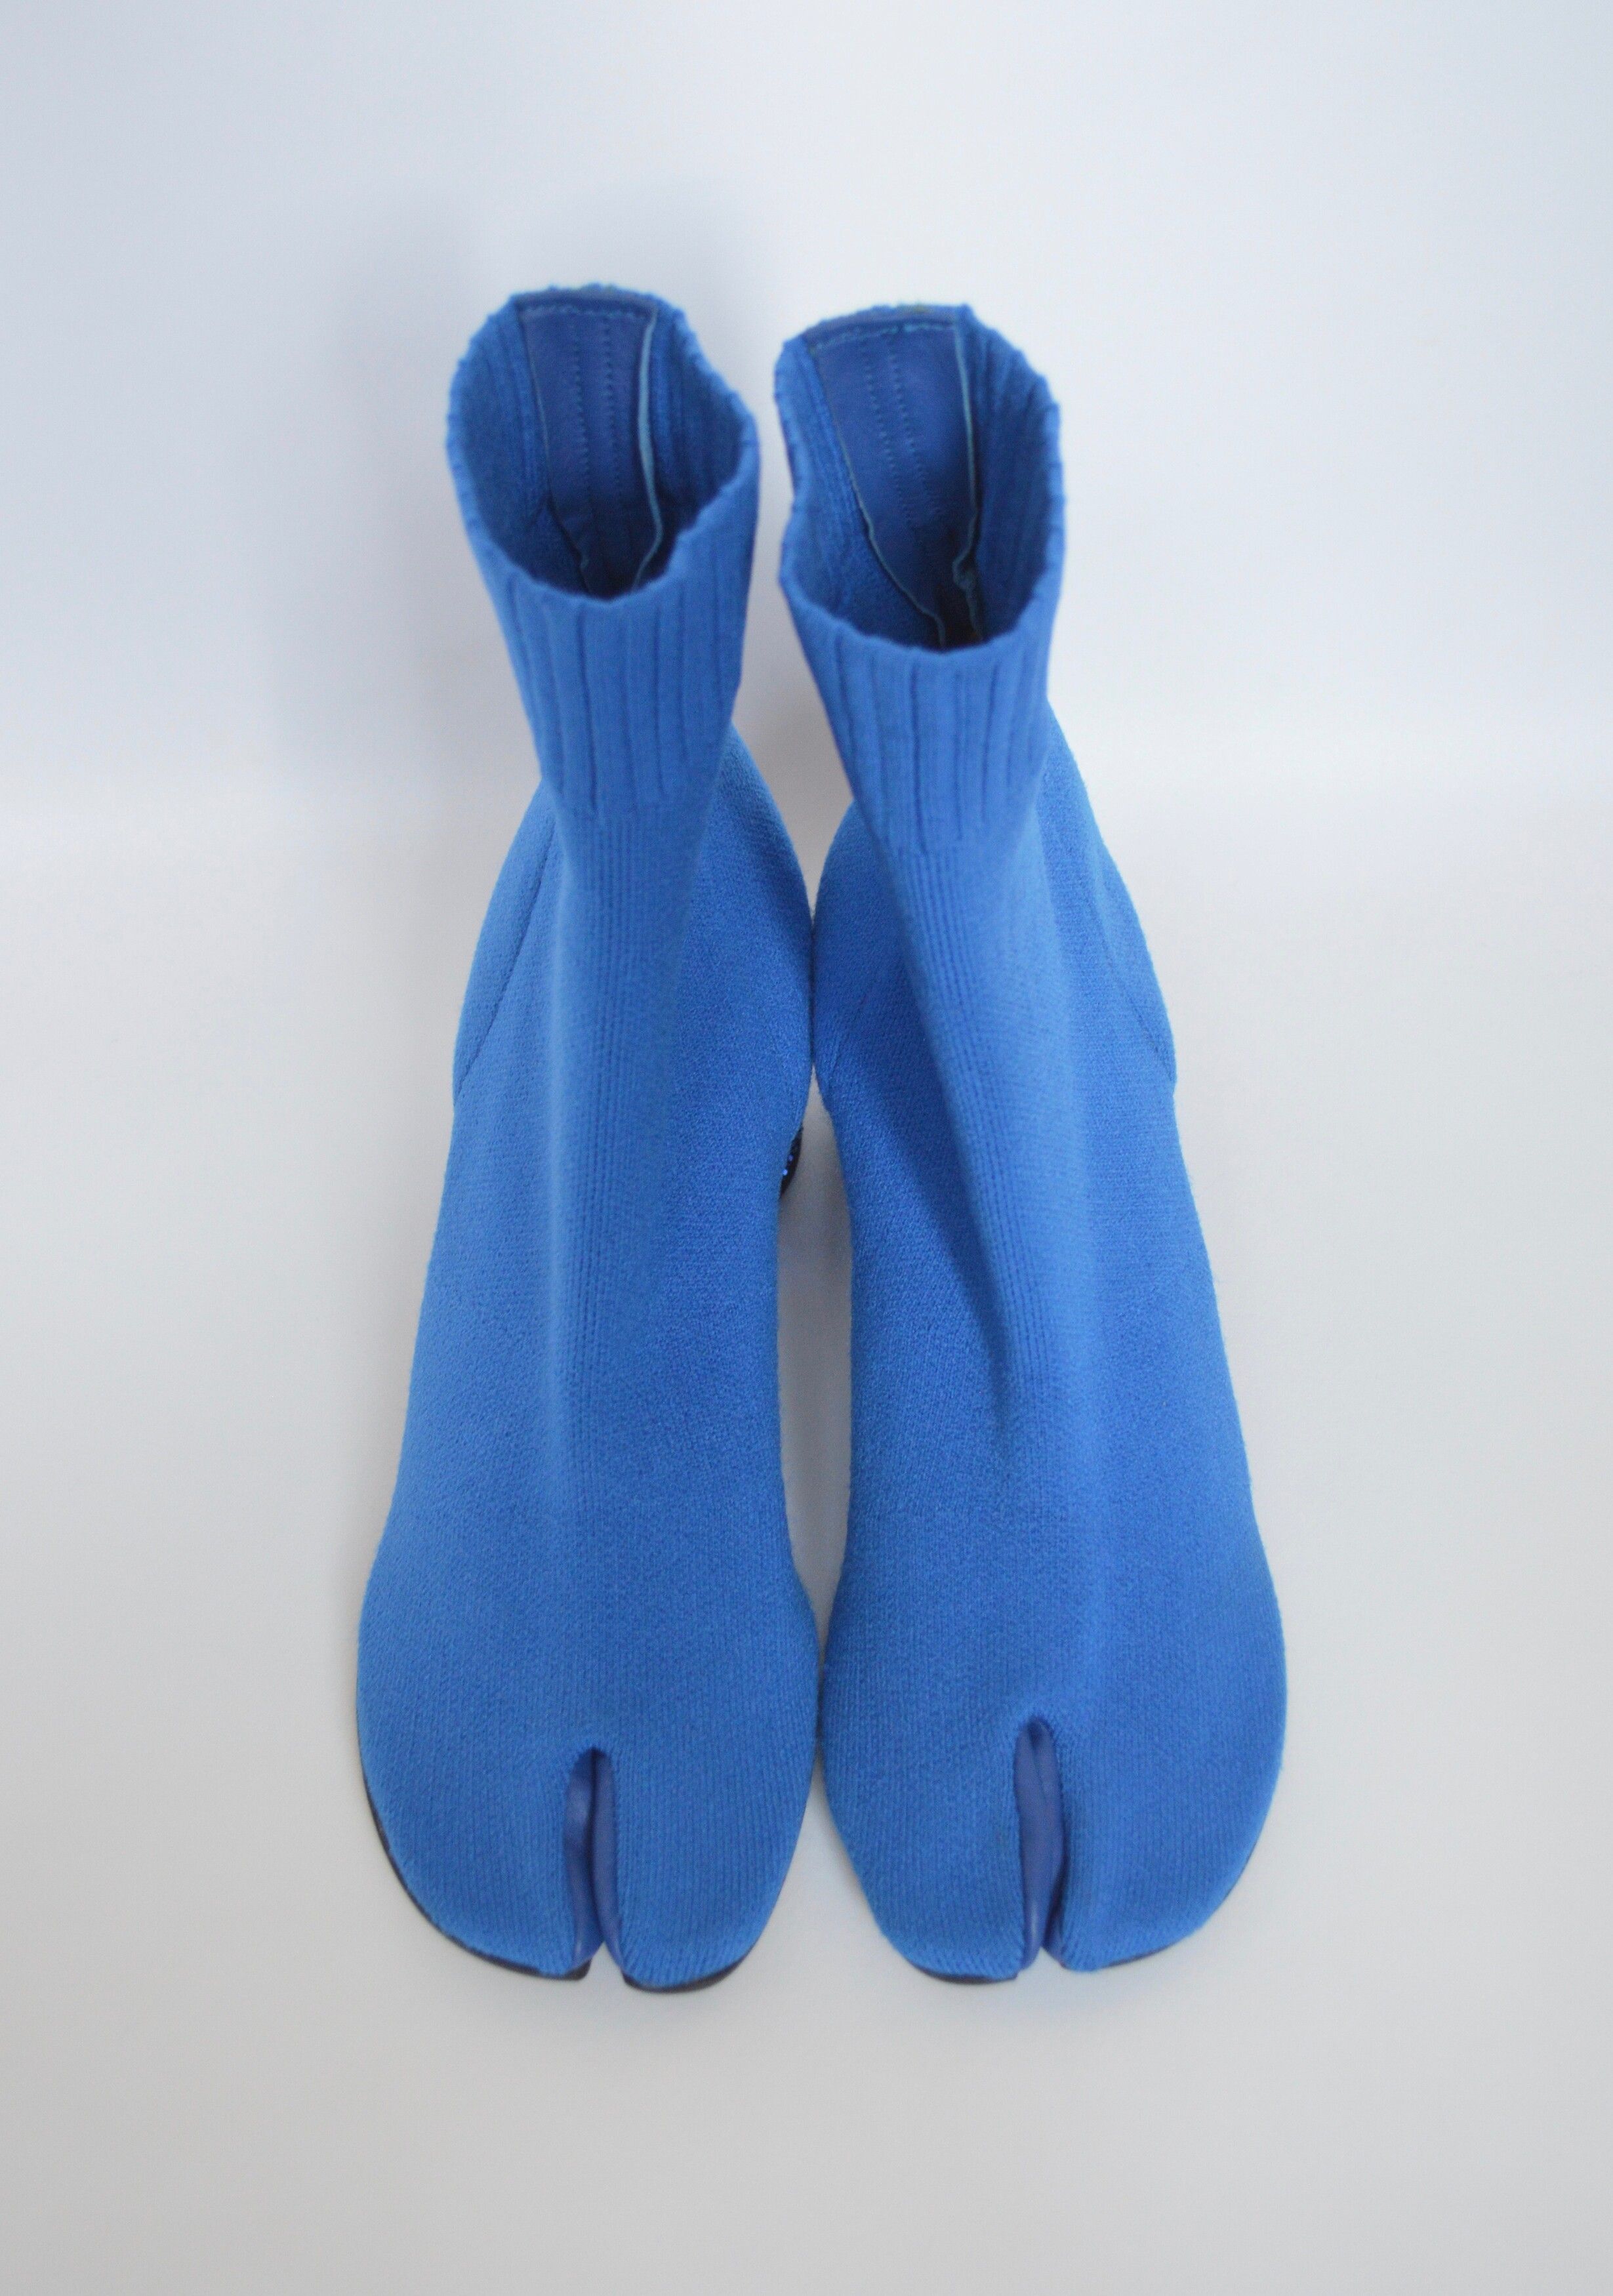 Maison Margiela Glitter Heel Sock Tabi Boots | Grailed